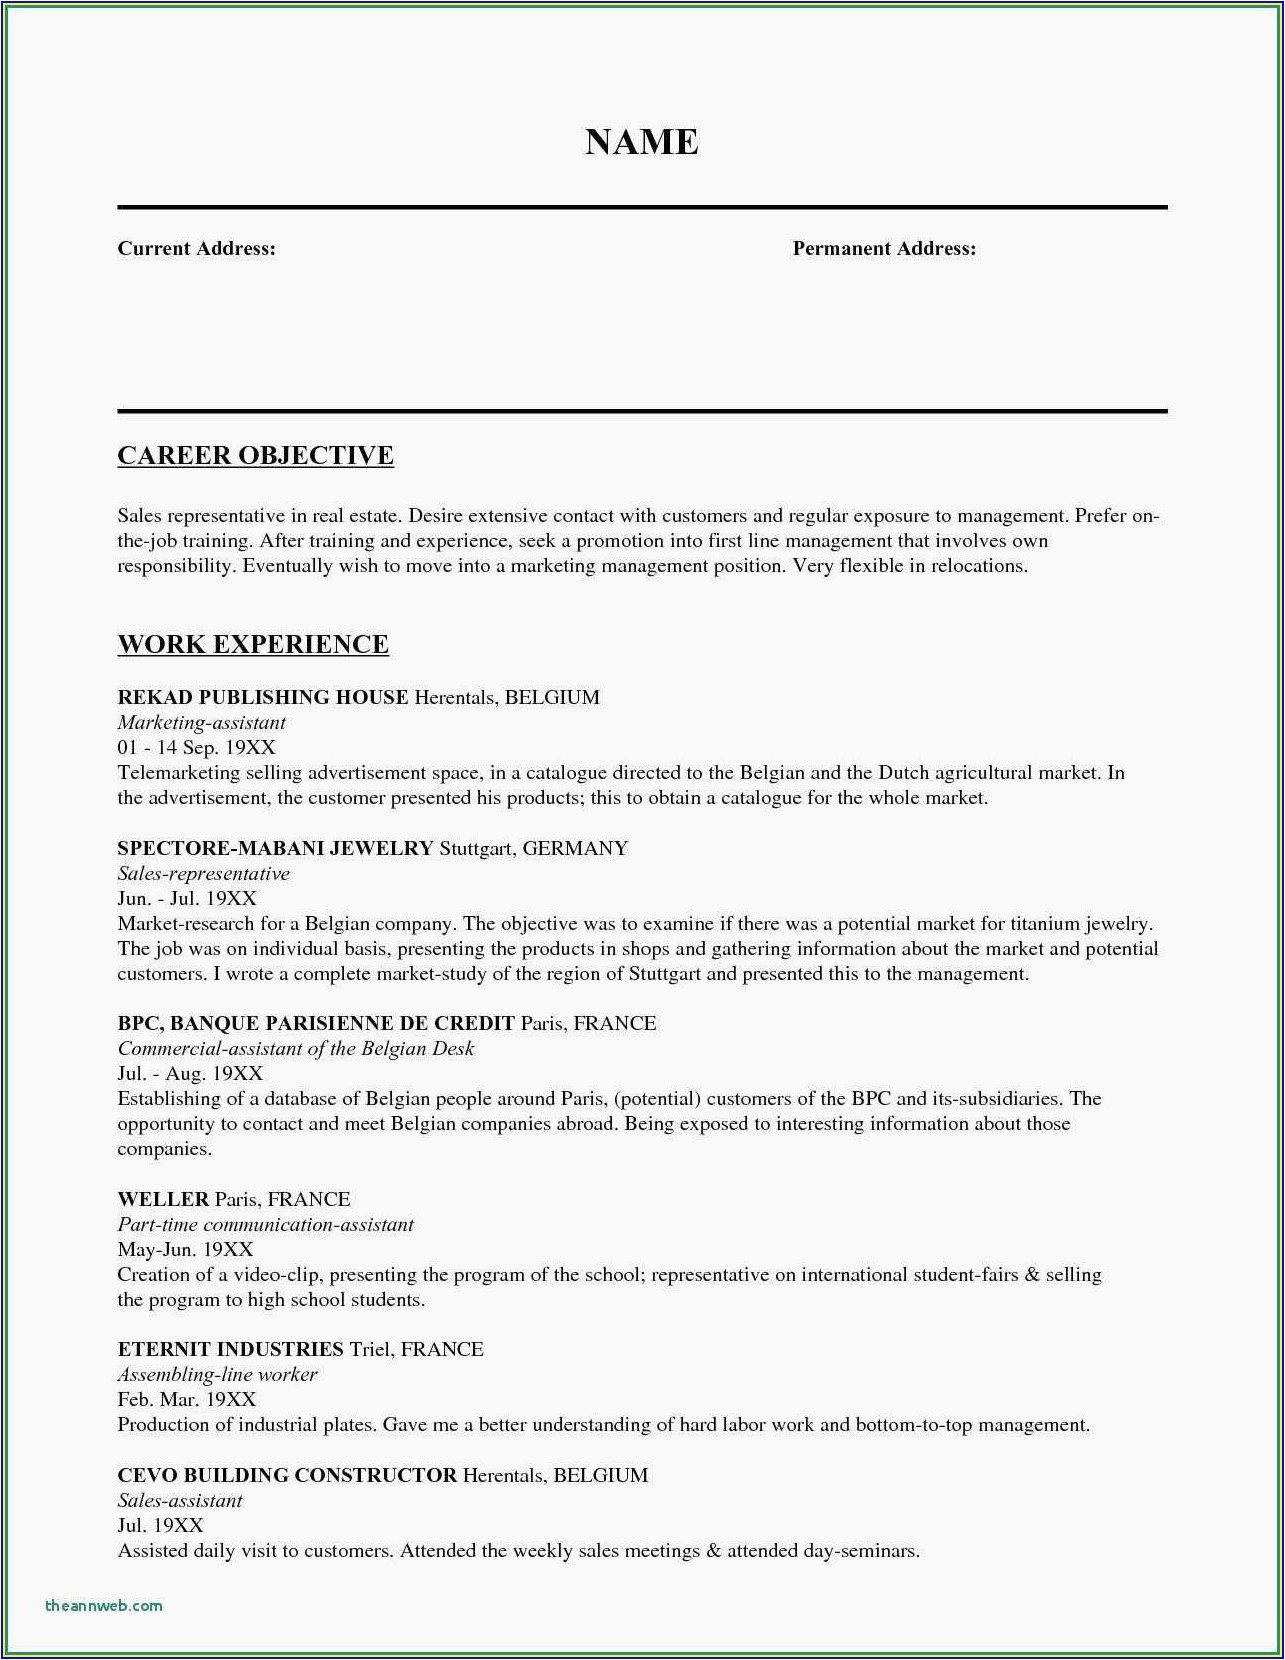 Sample Resume for Nurses Applying Abroad Pdf Sample Curriculum Vitae for Nurses Applying Abroad